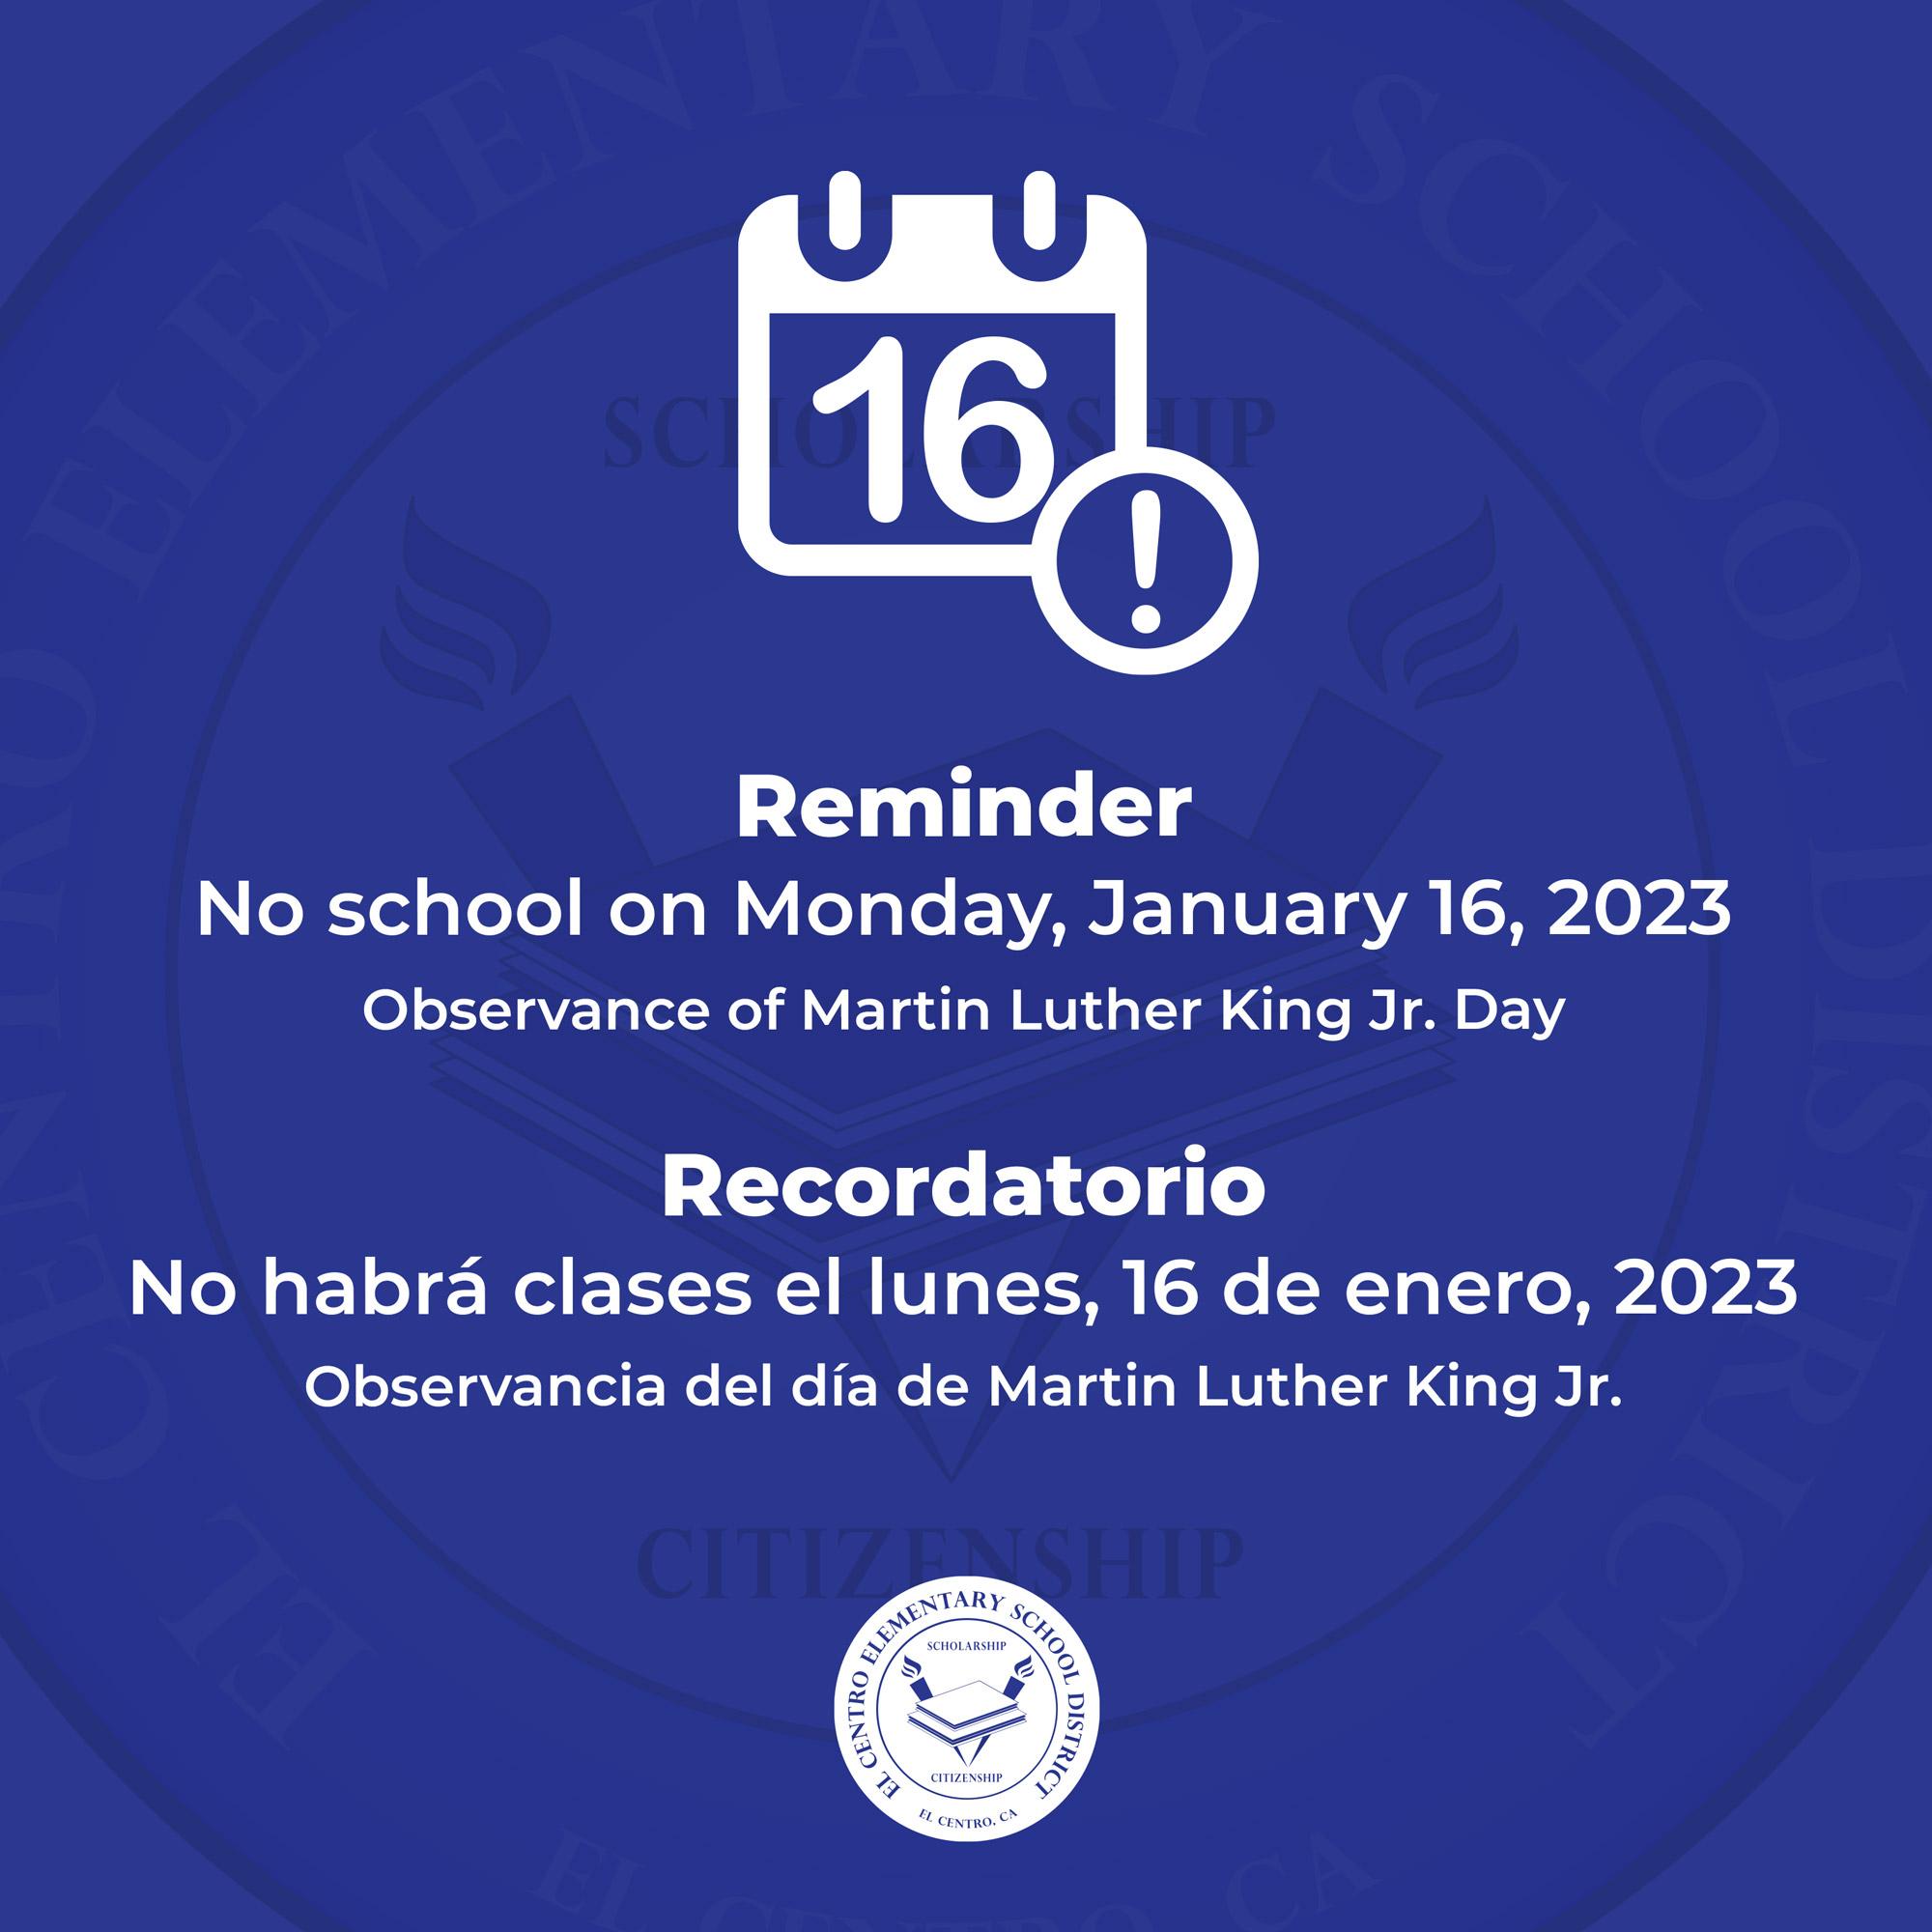 No school on Monday, January 16, 2023